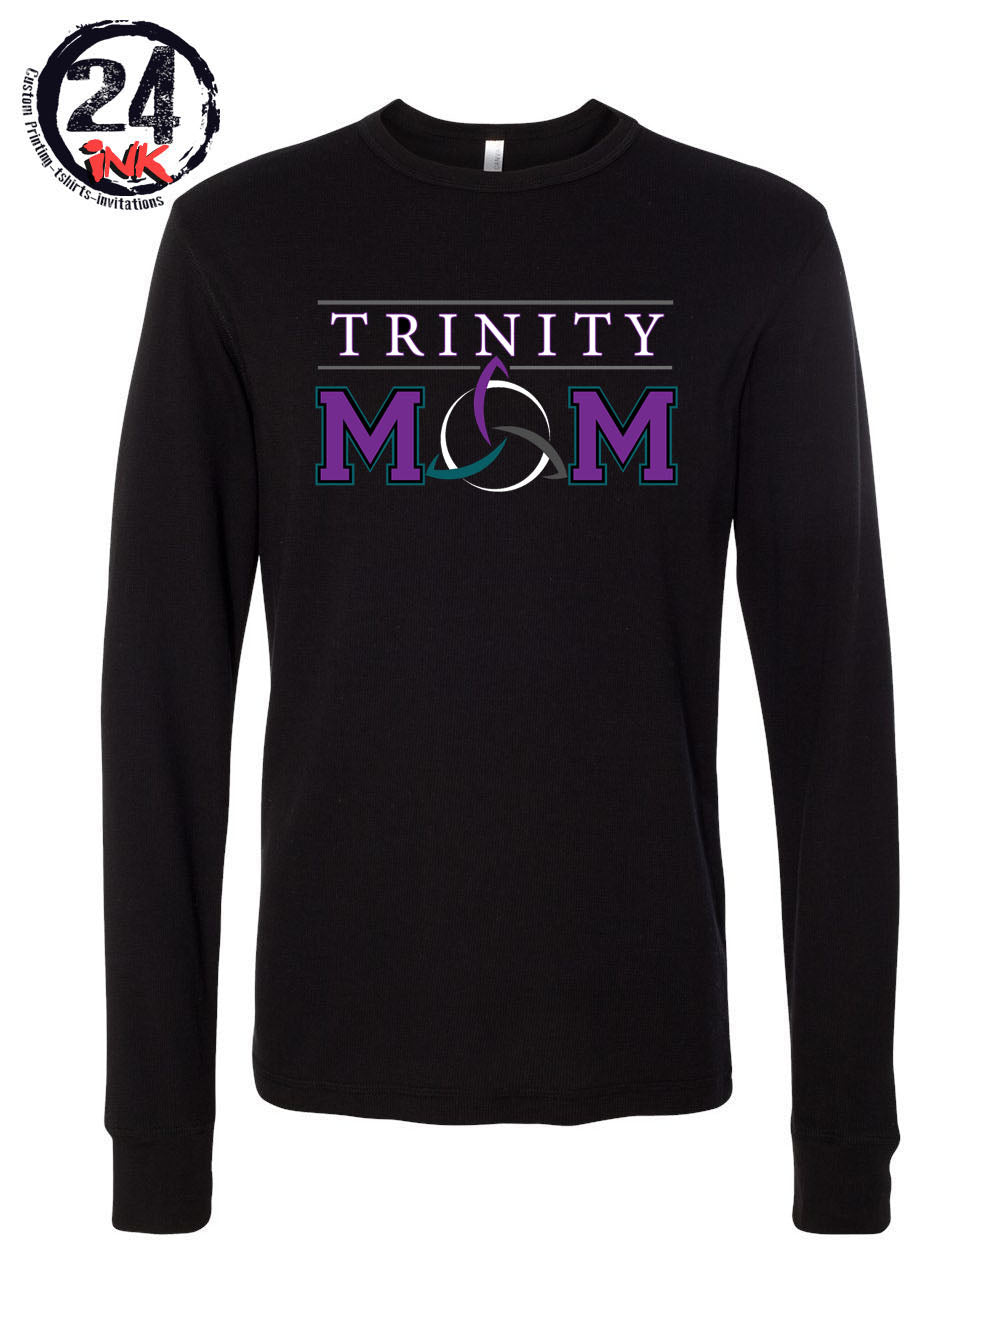 Trinity Mom long sleeve shirt